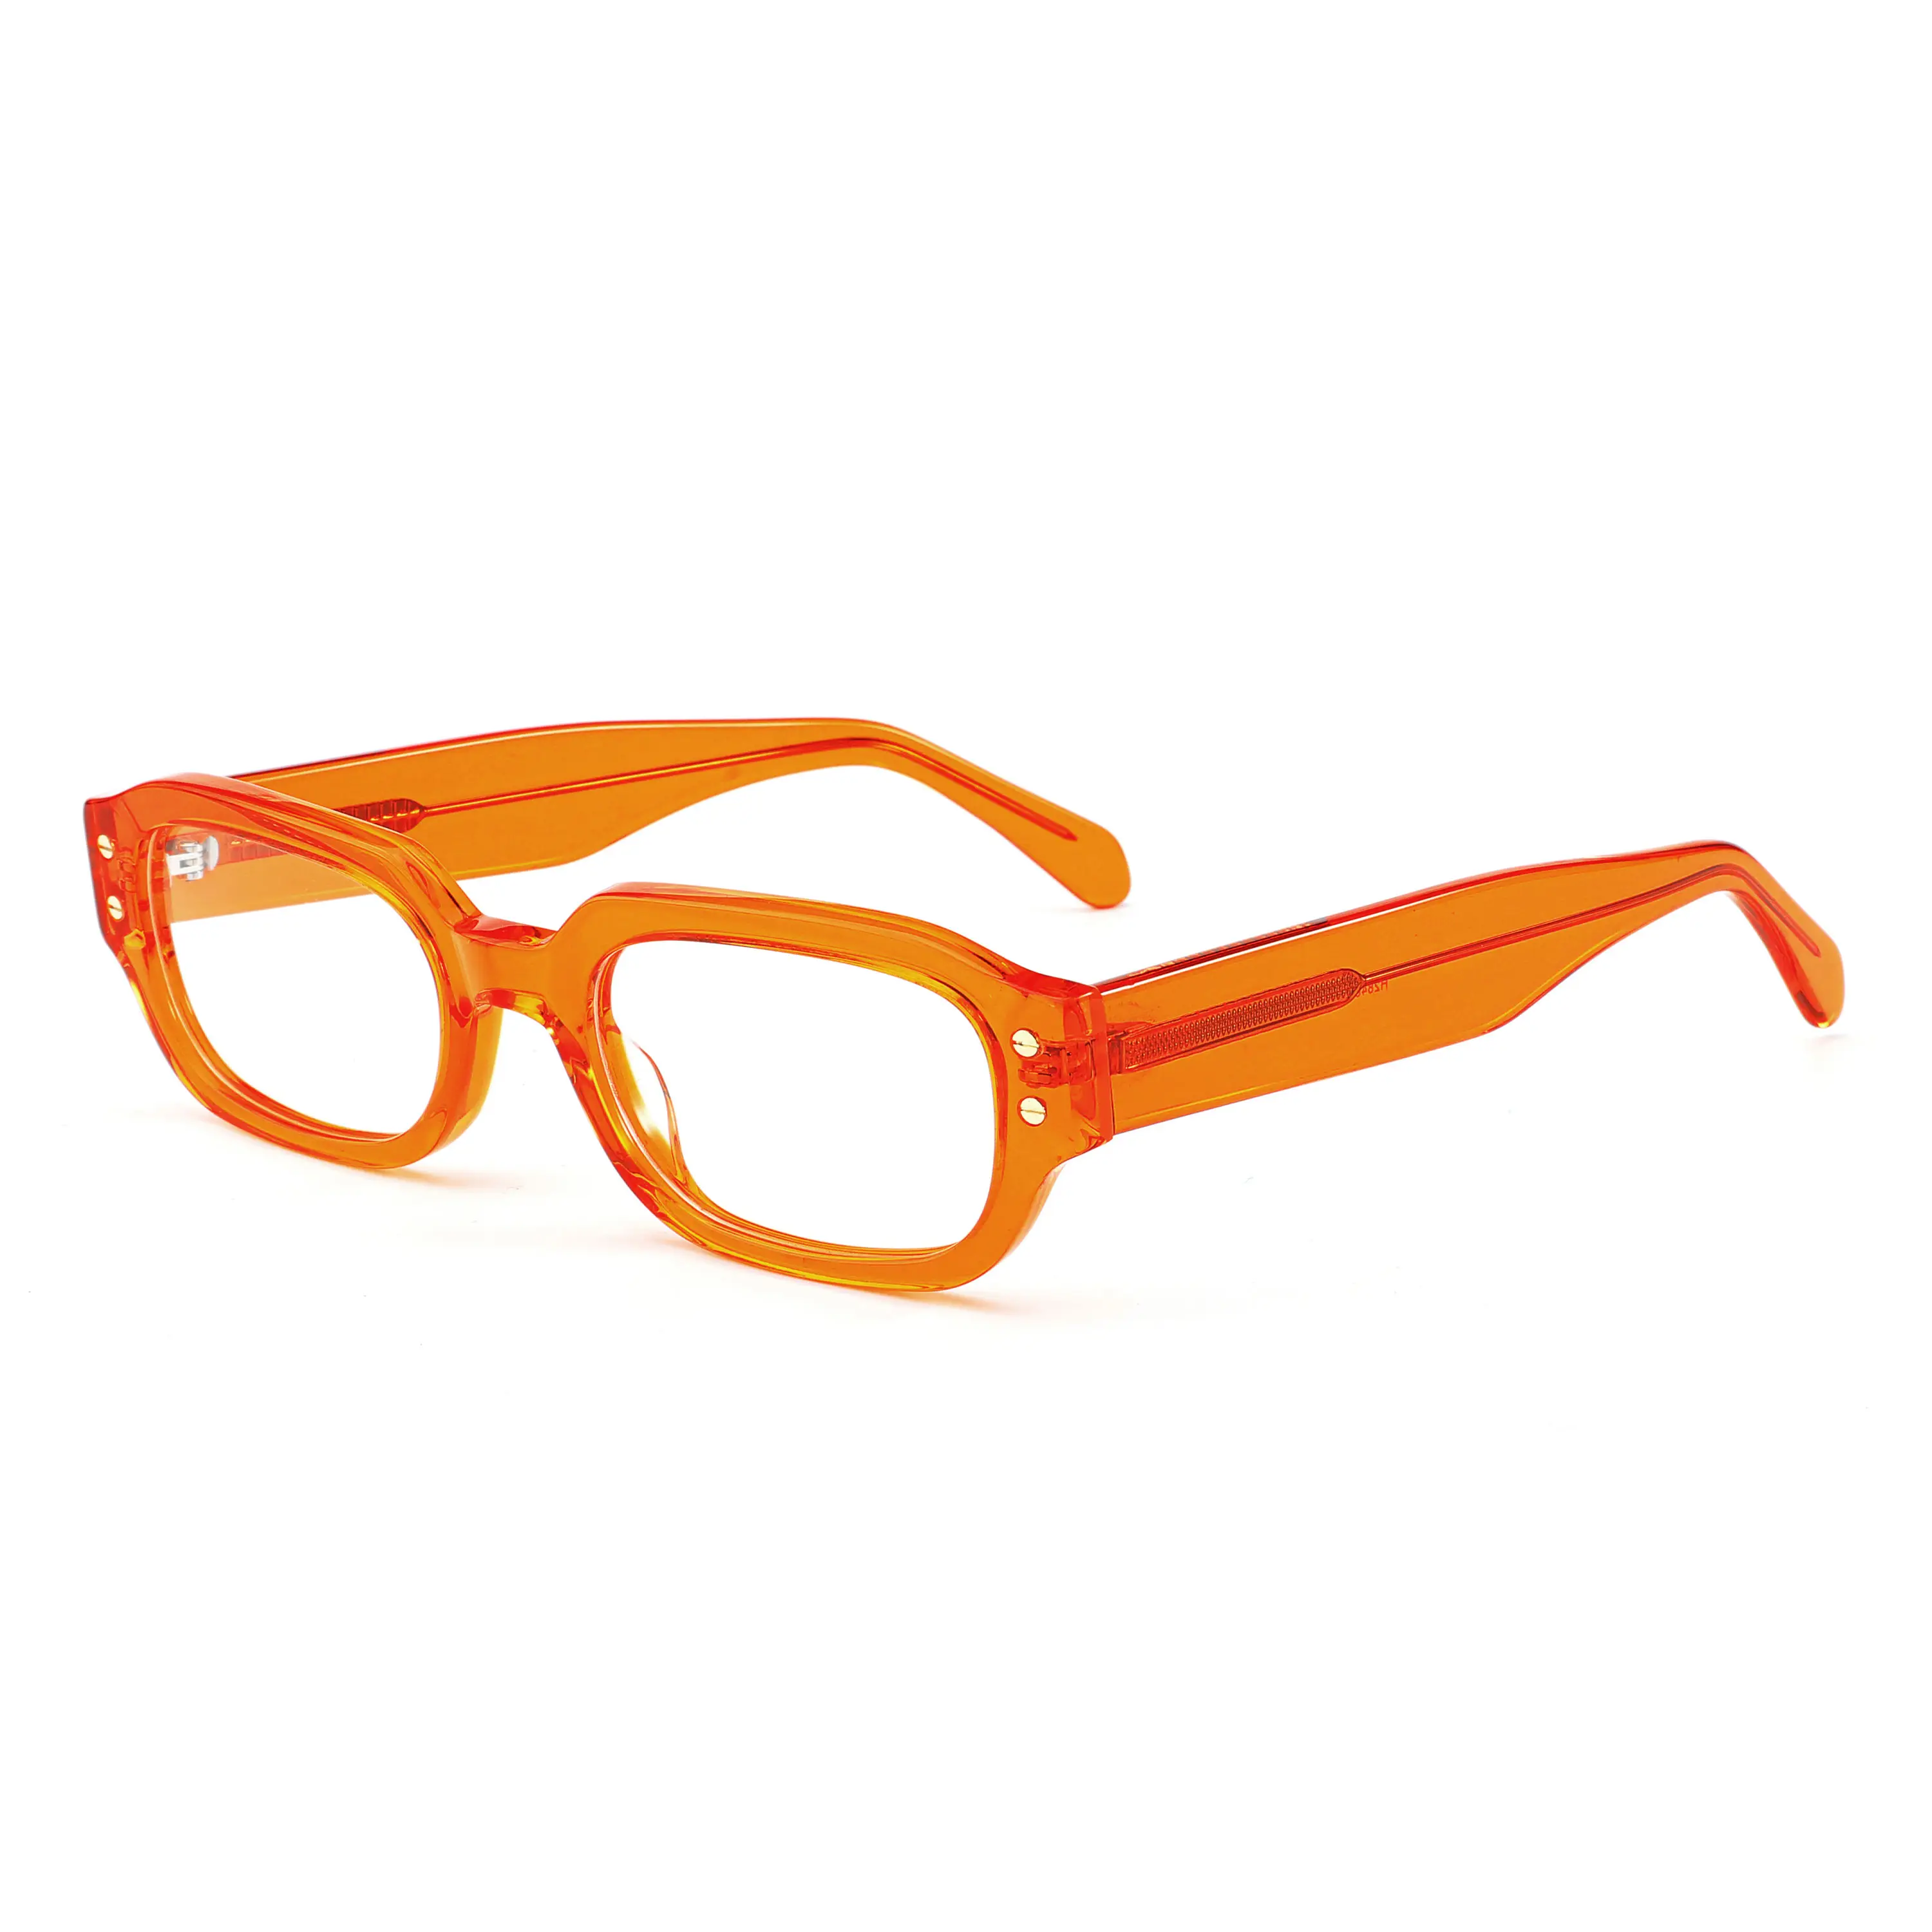 Kacamata bingkai persegi bening cahaya biru antik mode Retro mewah kacamata optik tebal beragam kualitas tinggi bingkai kacamata asetat